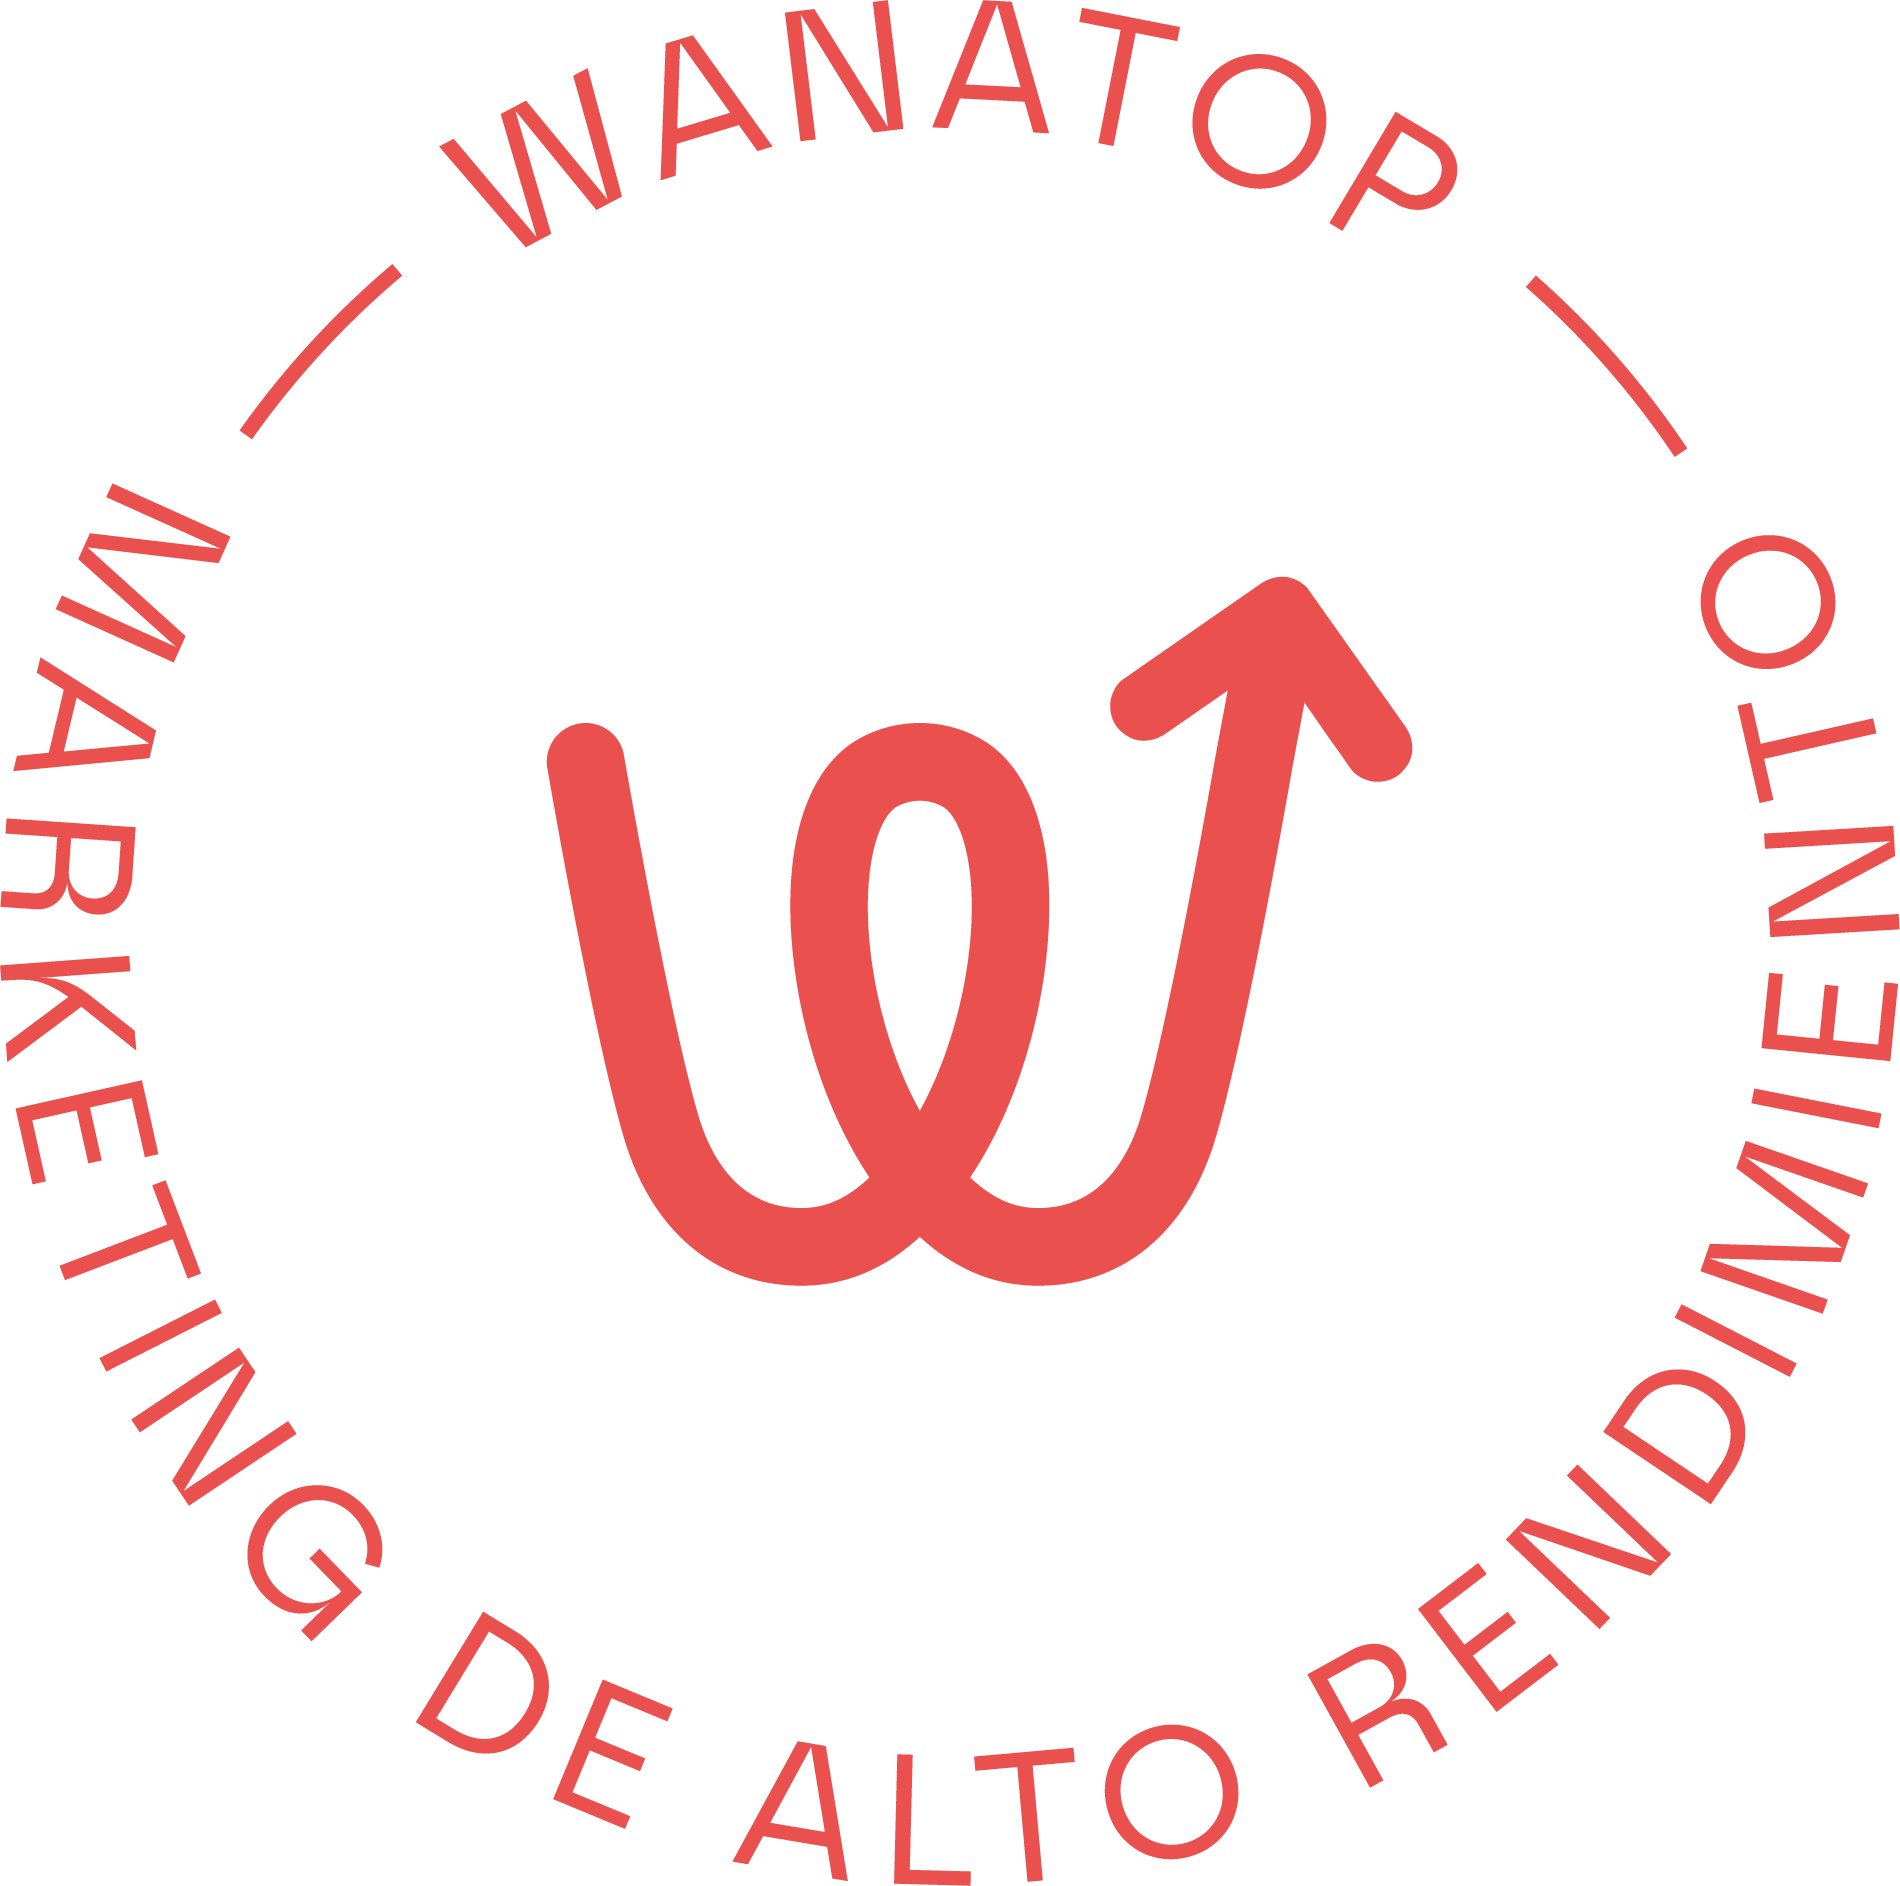 Wanatop